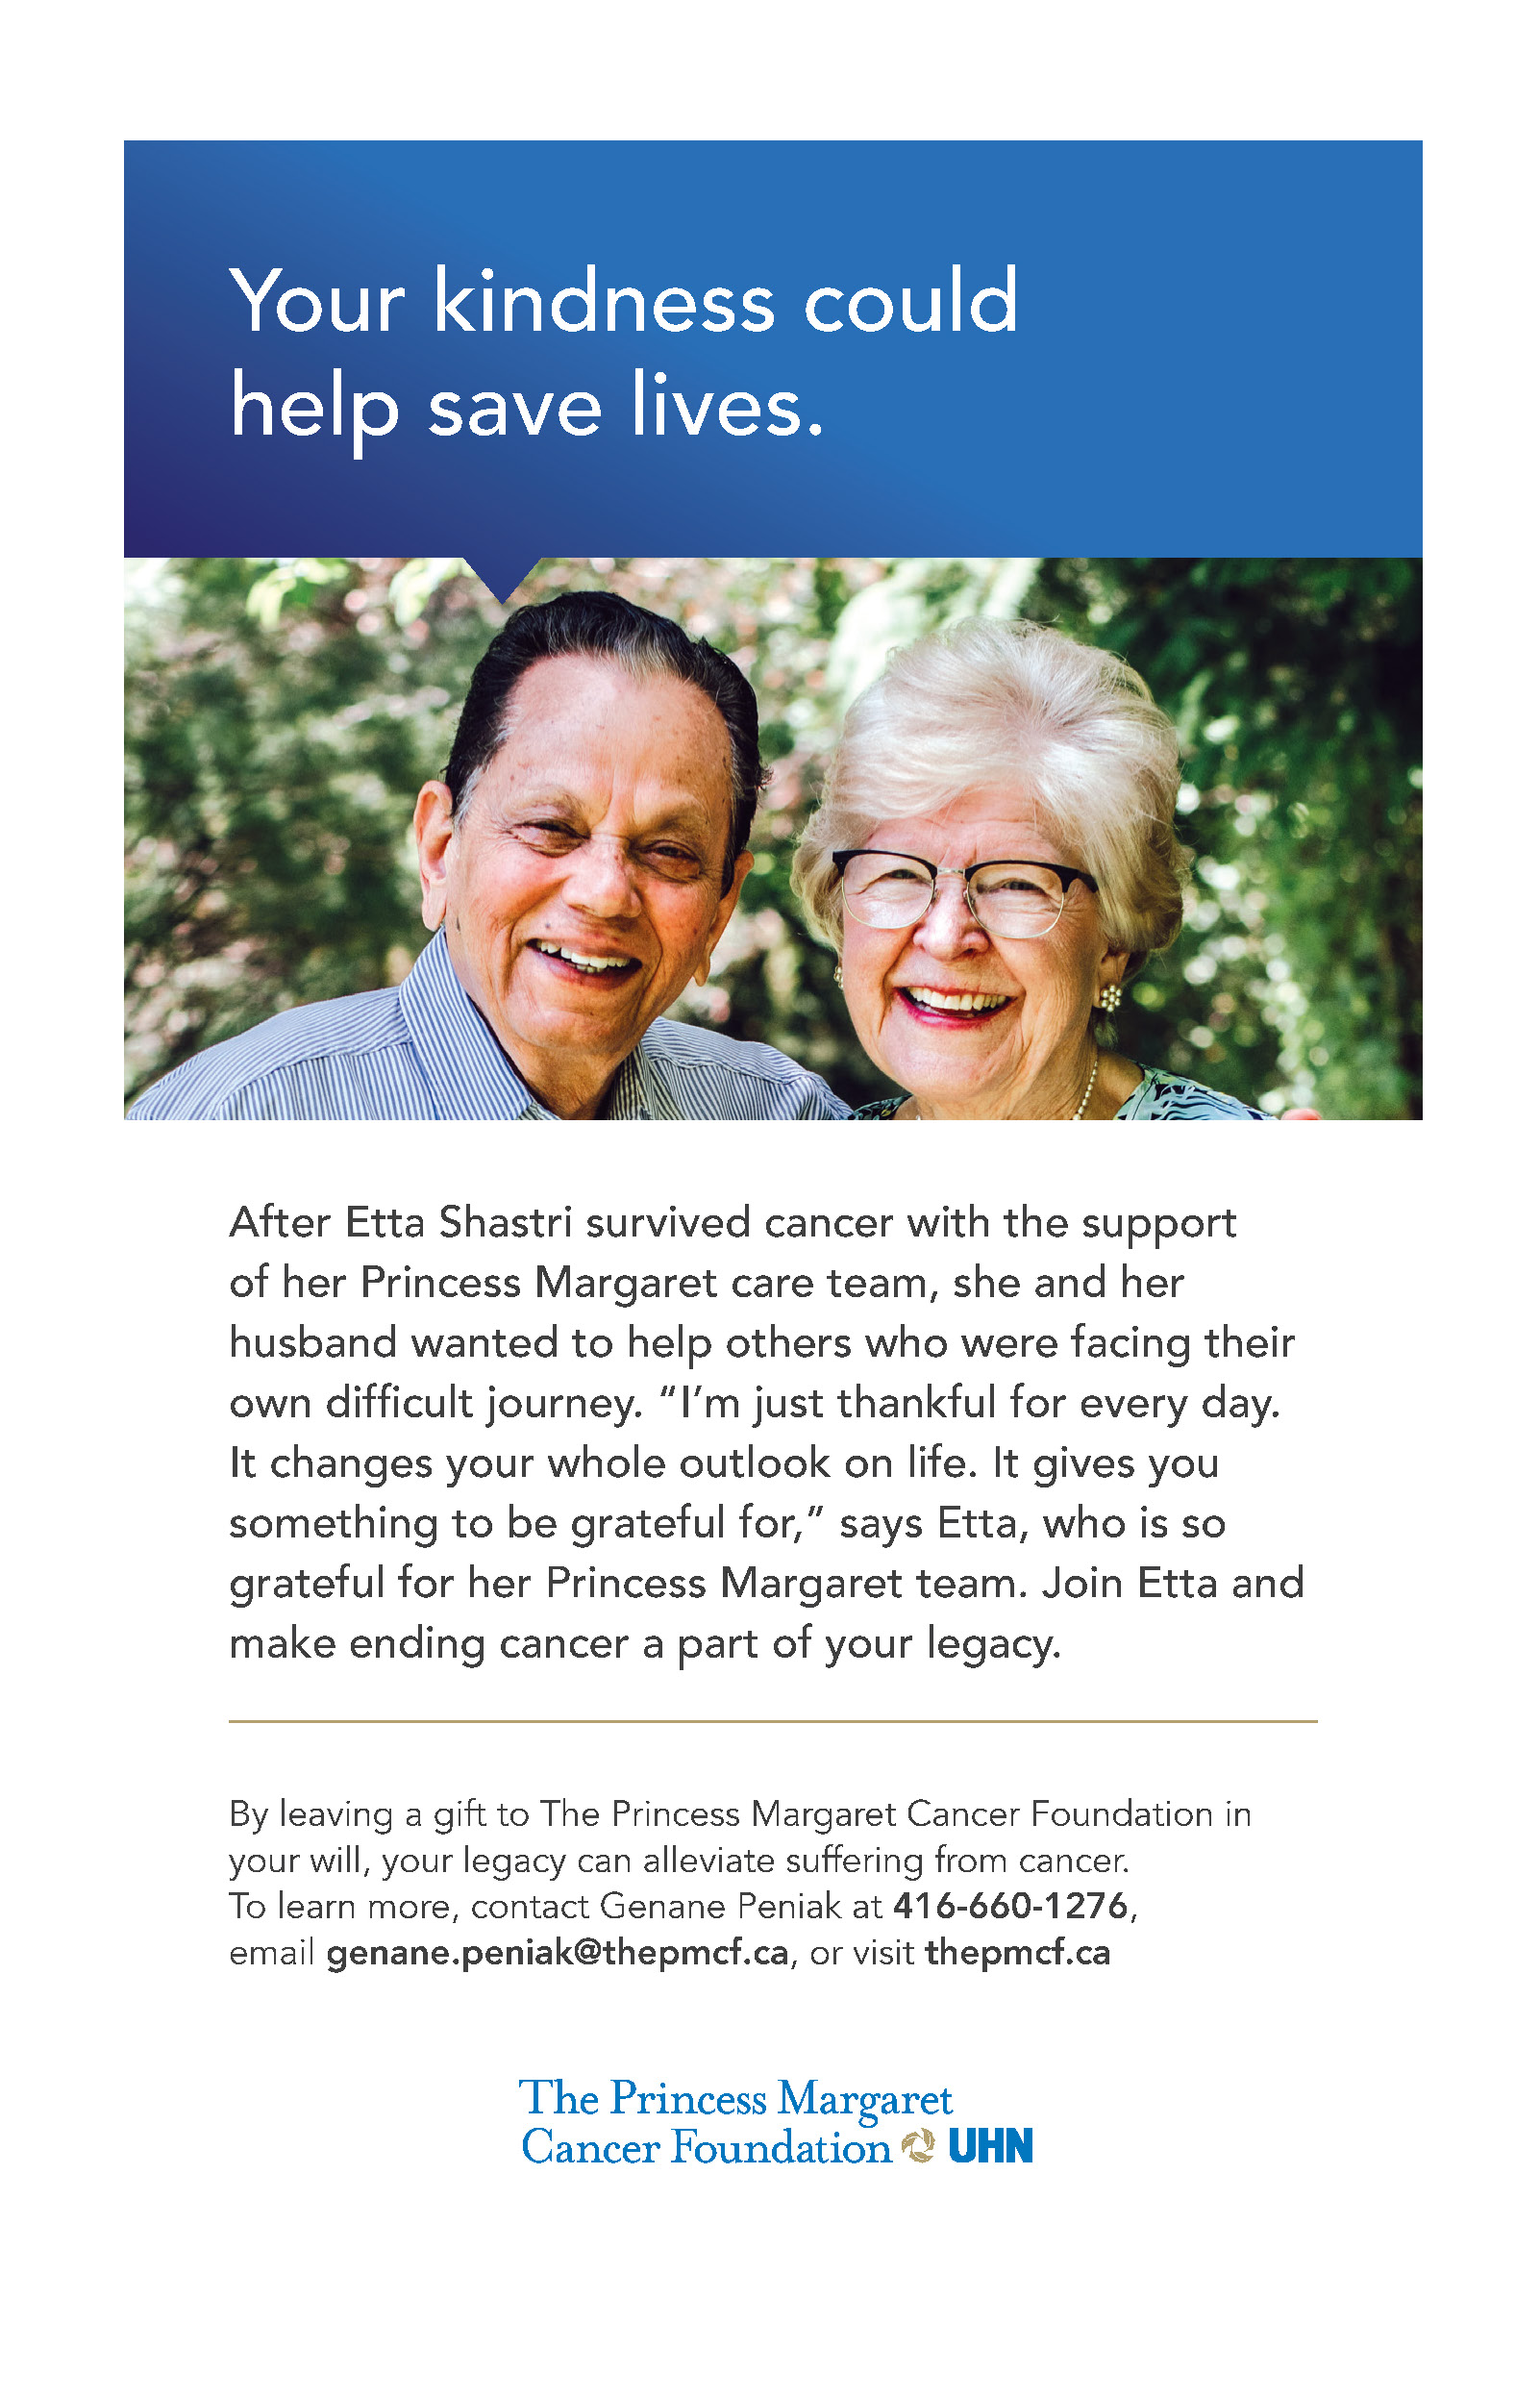 PRINCESS MARGARET CANCER  FOUNDATION (THE)